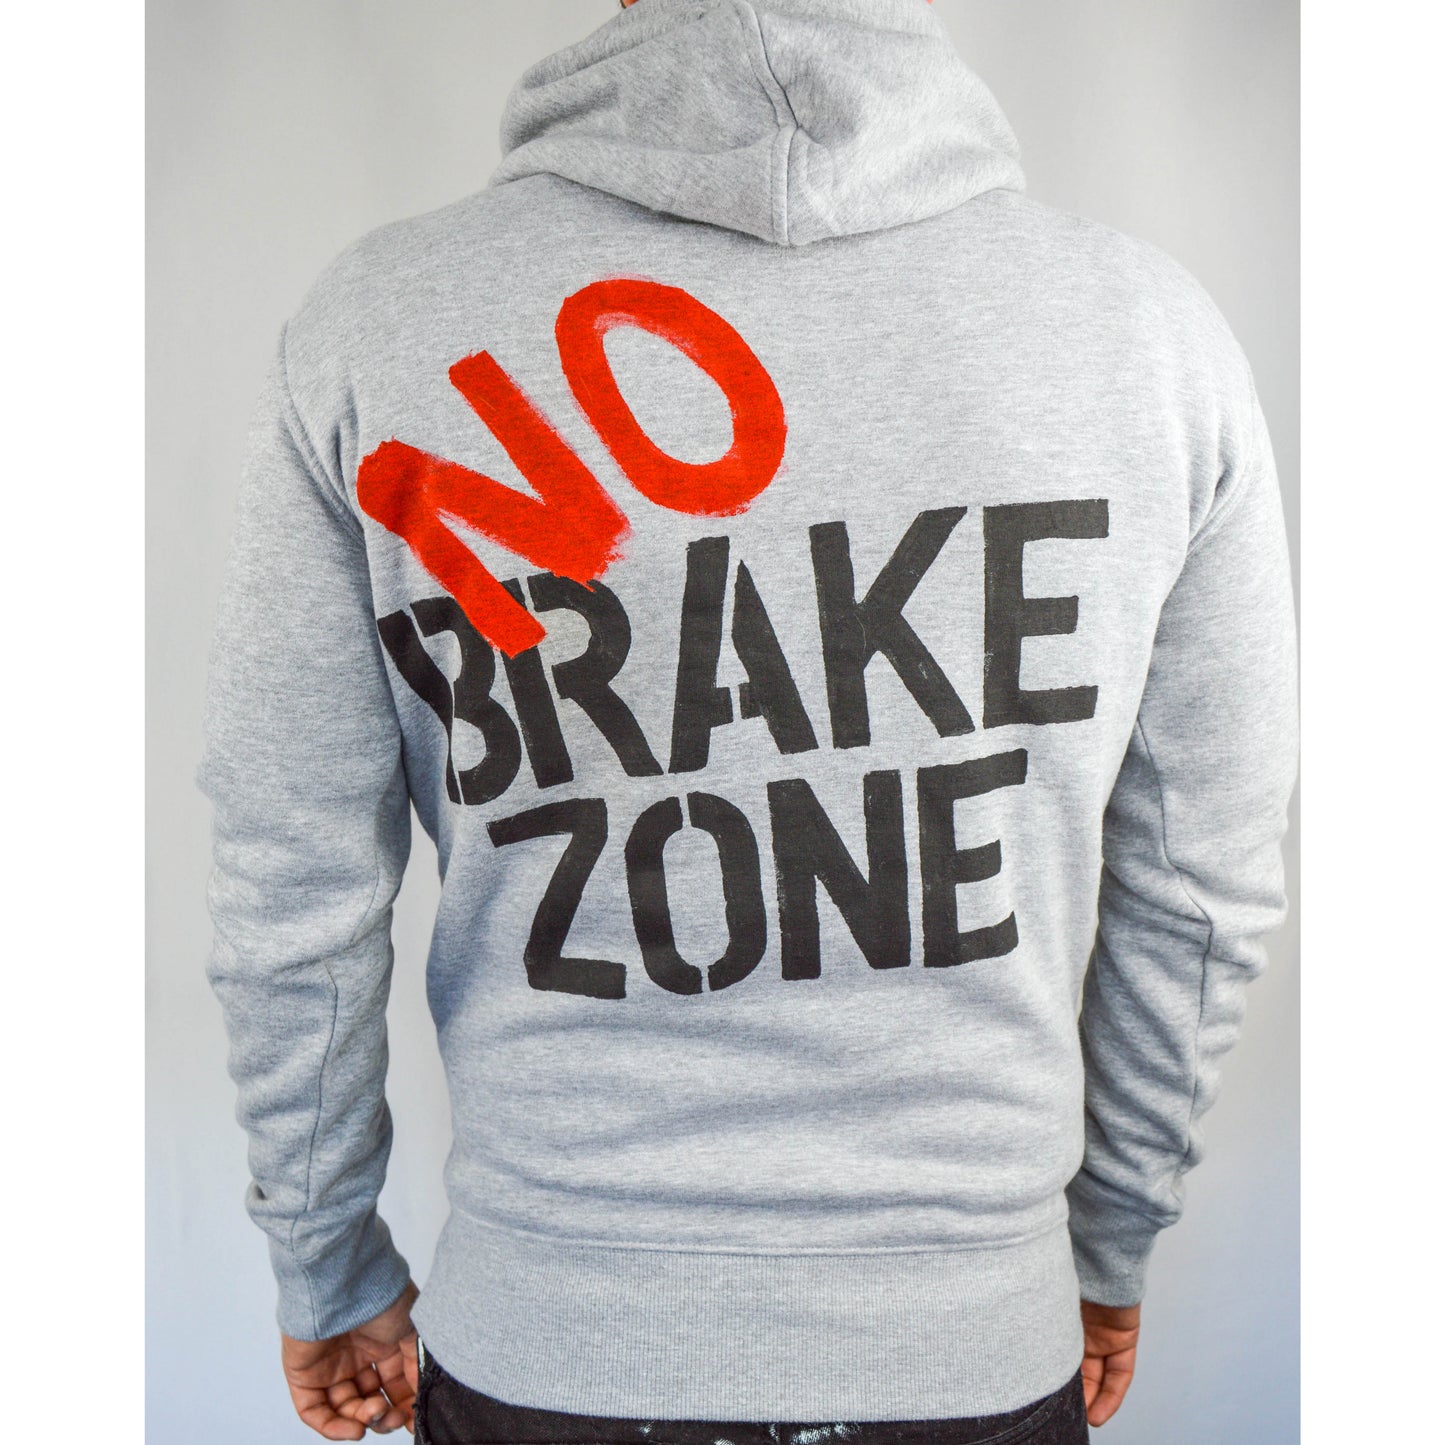 Organic and recycled No Brake hoodie